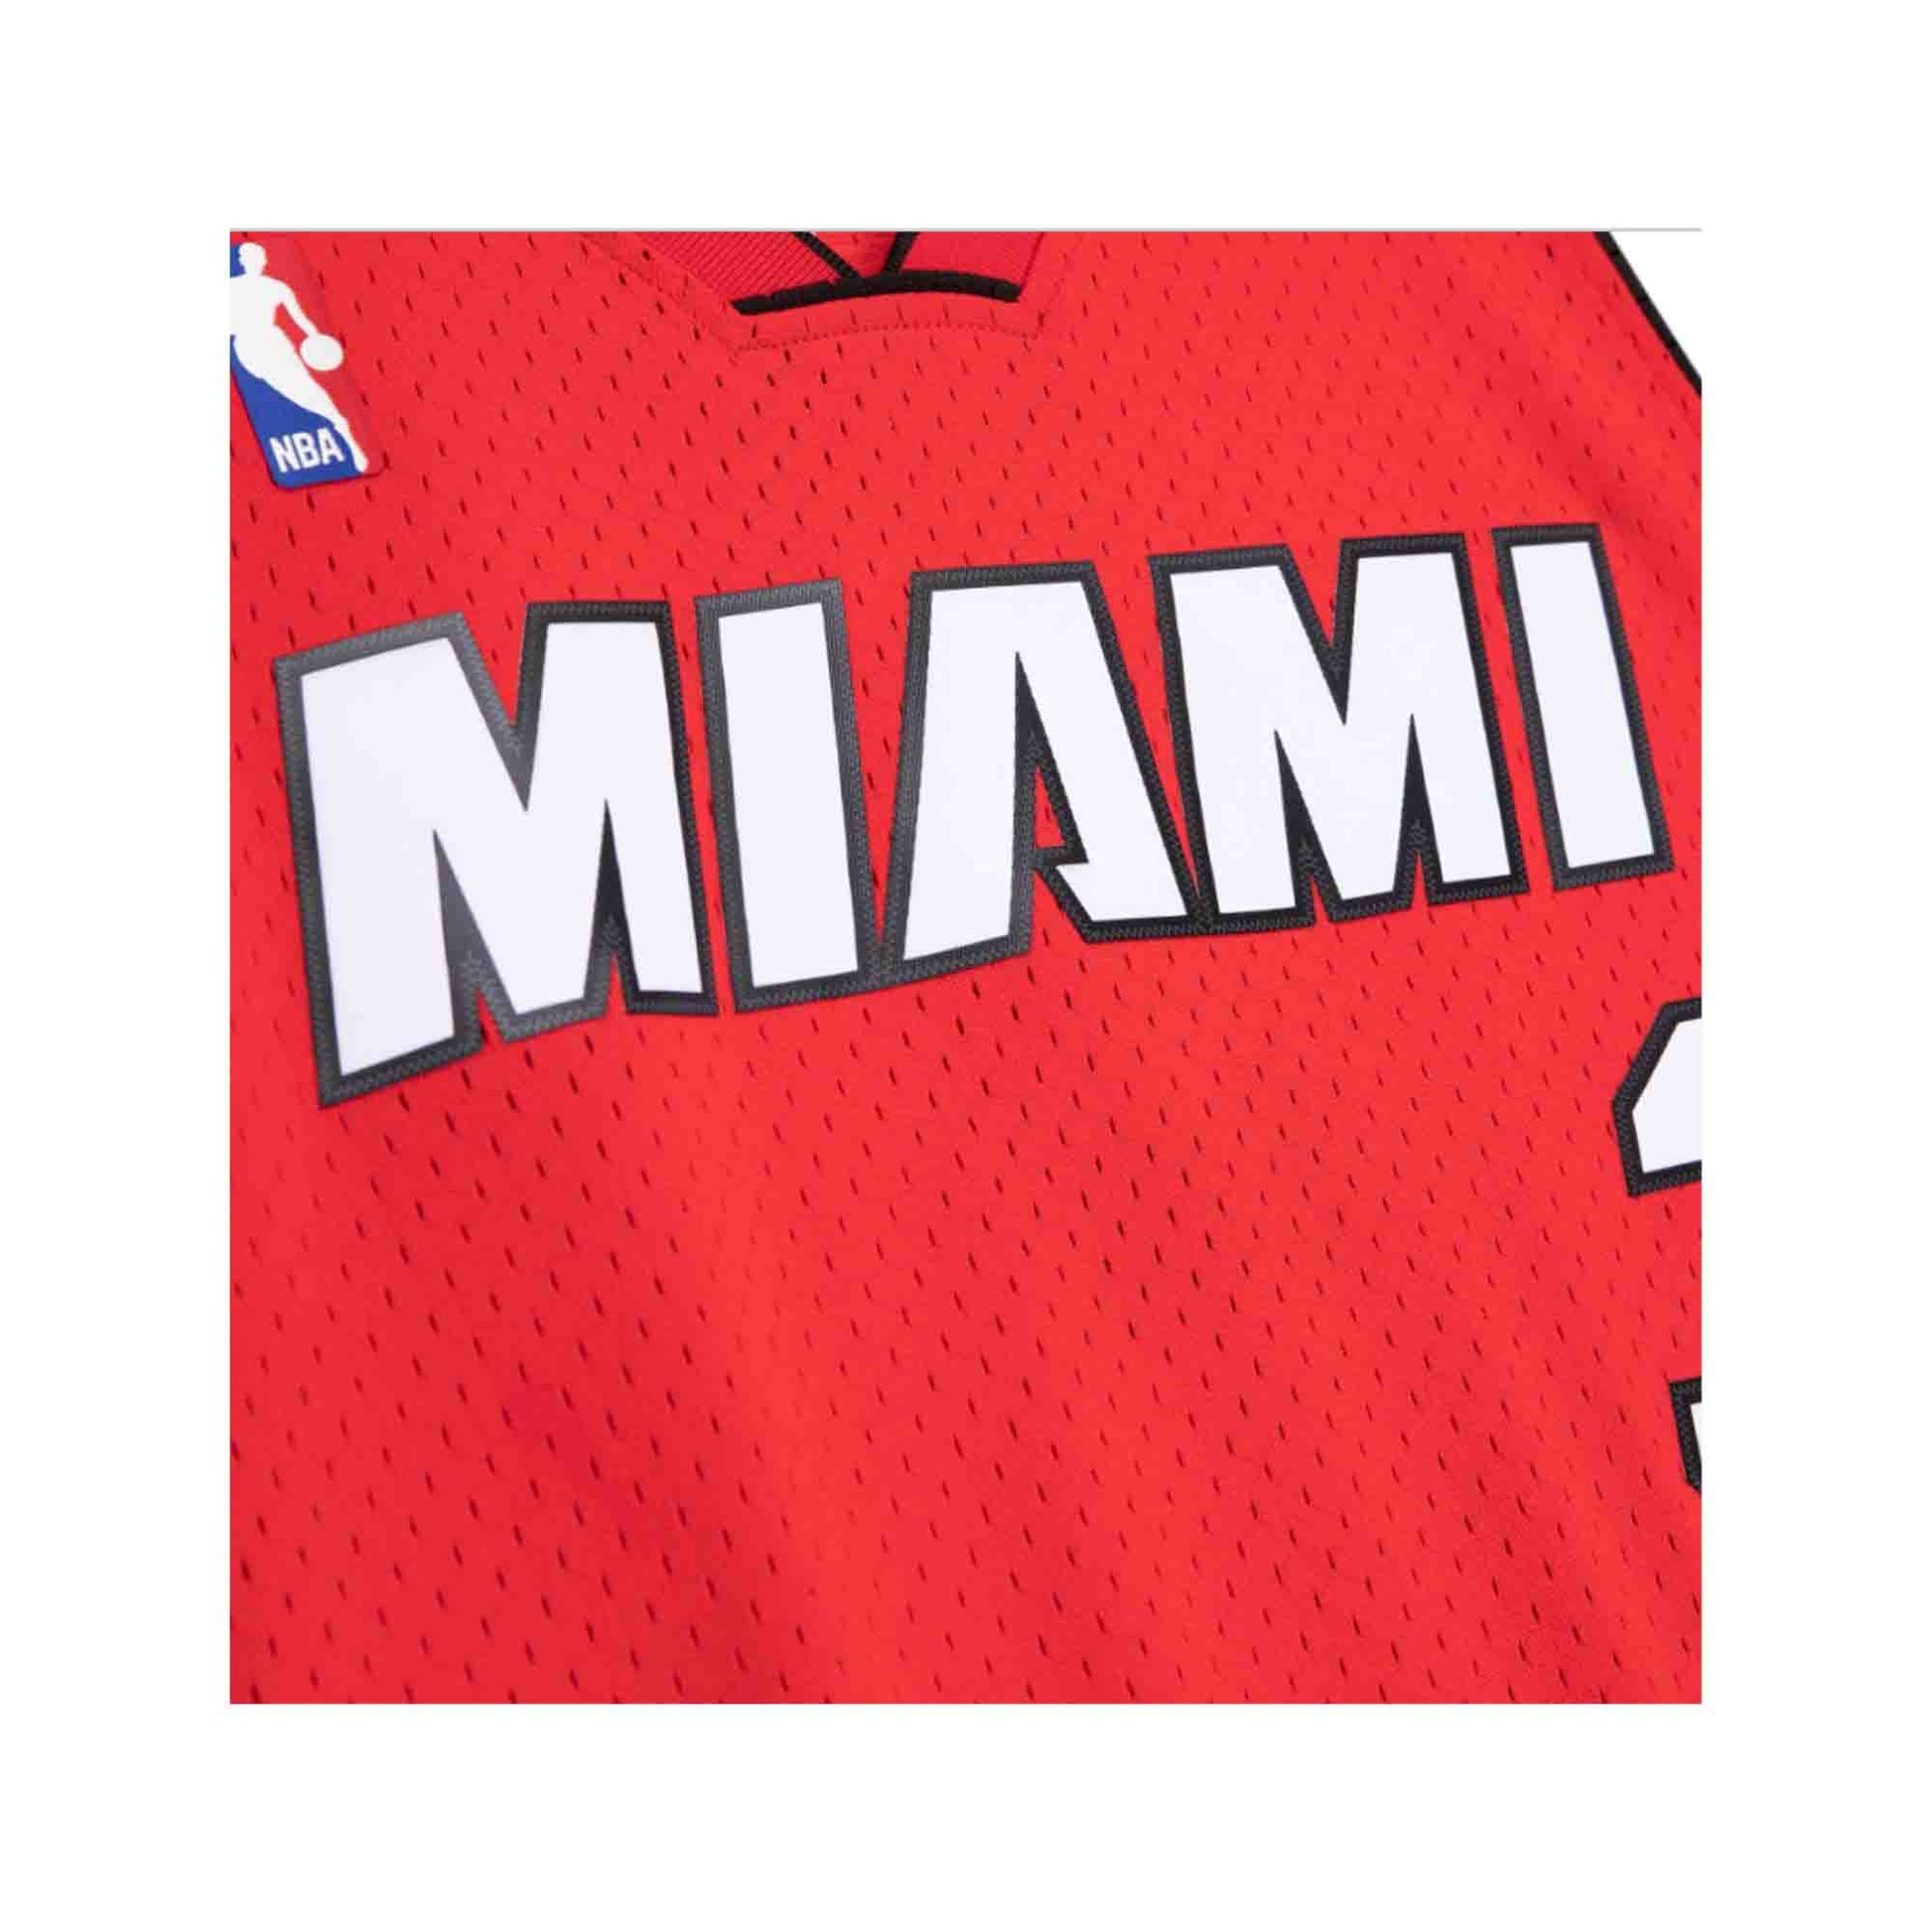 Adidas Authentic Miami Heat Jersey Wade 3